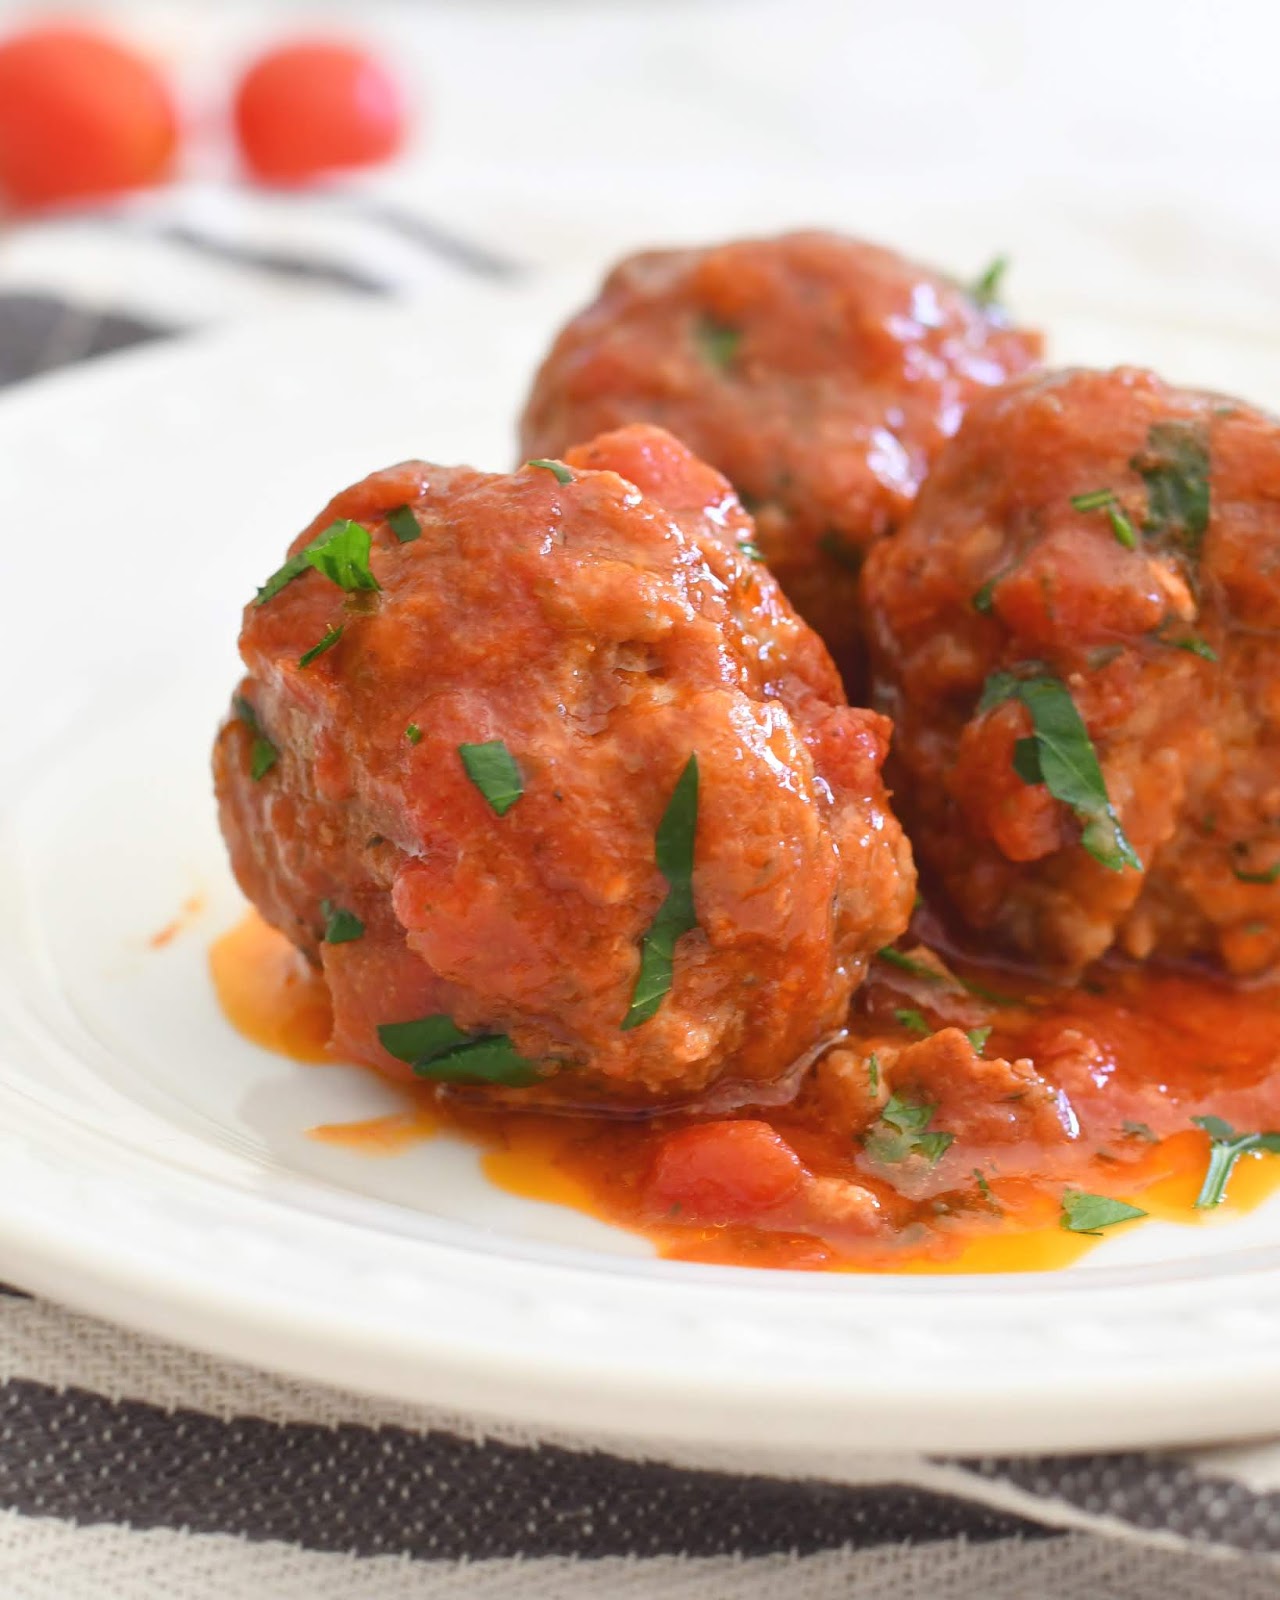 Cooking with Manuela: Italian Meatballs in Tomato Sauce - Polpette al Sugo